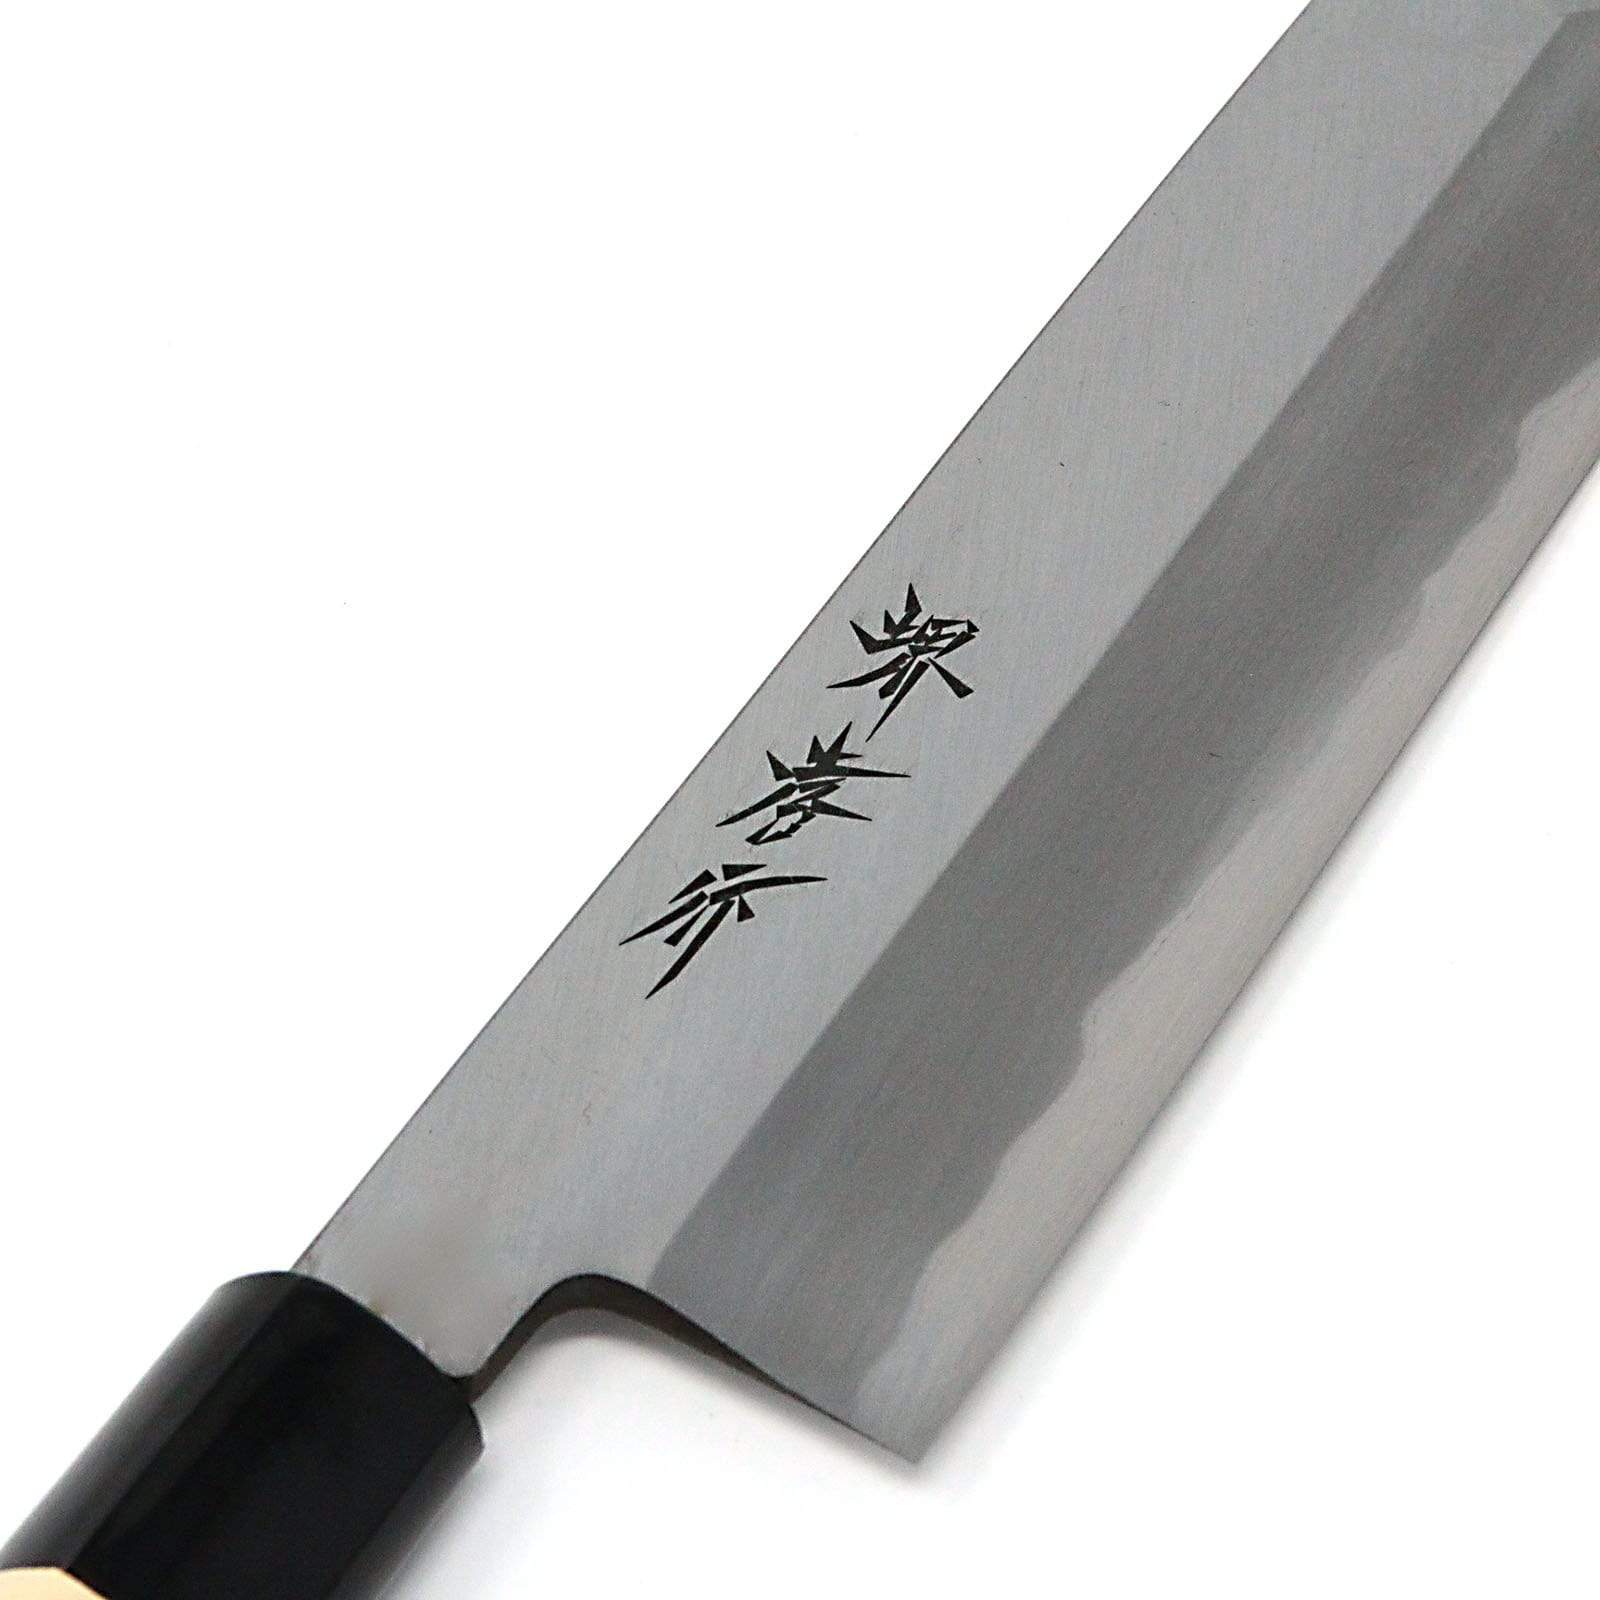 https://cdn.shopify.com/s/files/1/1610/3863/products/sakai-takayuki-kasumitogi-shirogami-carbon-steel-usuba-knife-usuba-knives-4490589700179_1600x.jpg?v=1564030455